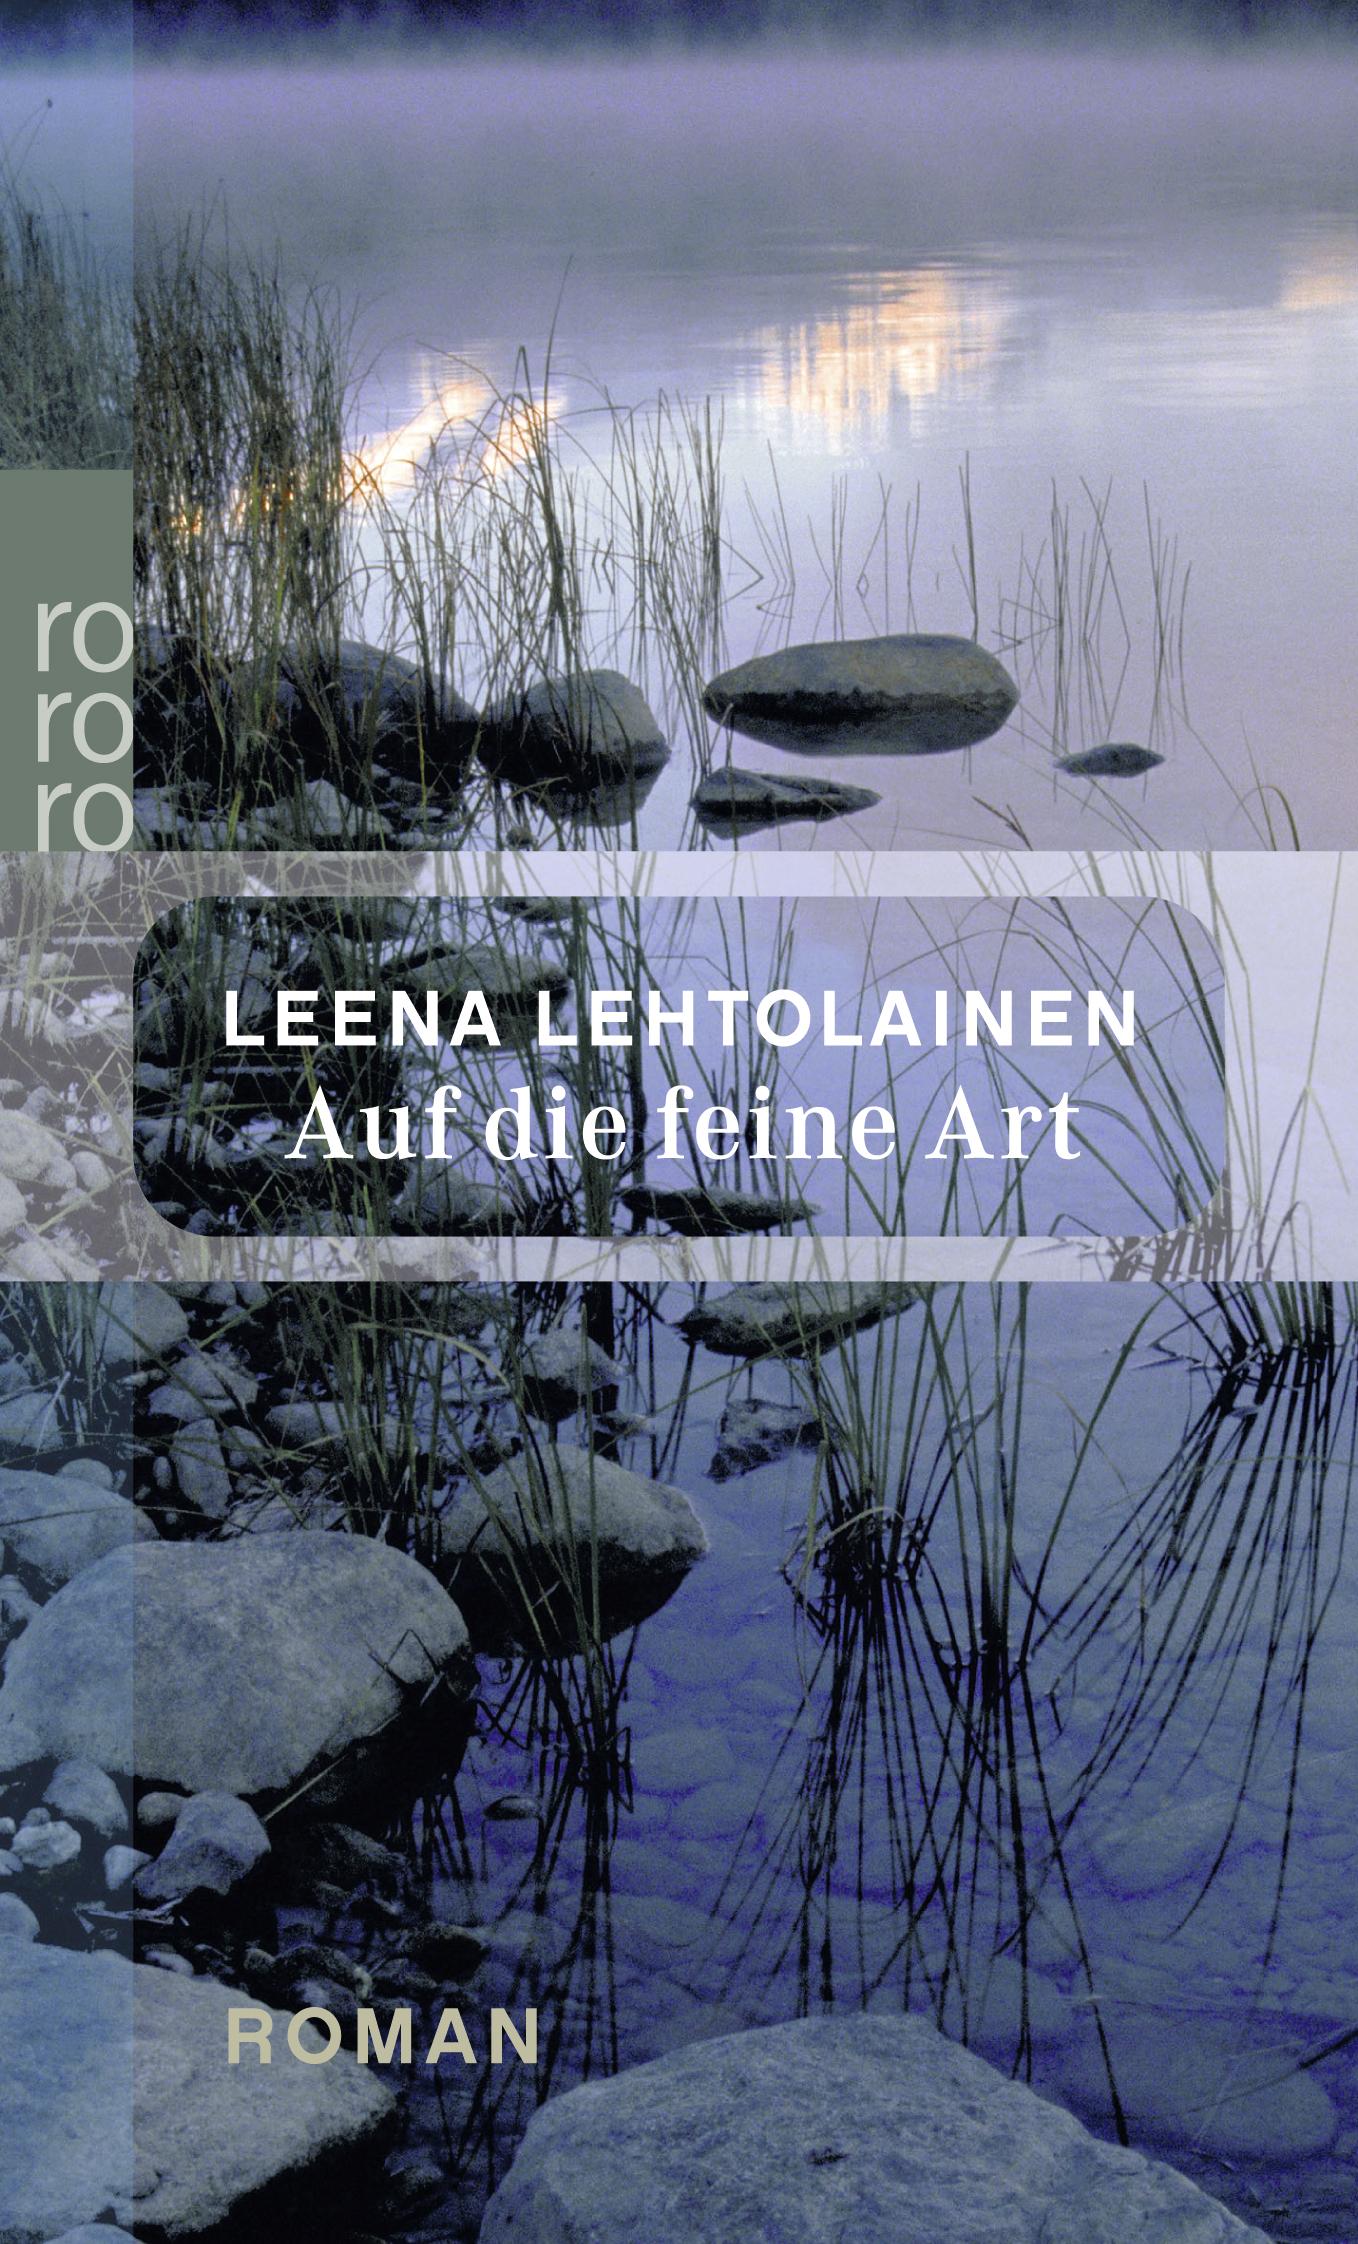 NEU Auf die feine Art Leena Lehtolainen 230899 - Picture 1 of 1